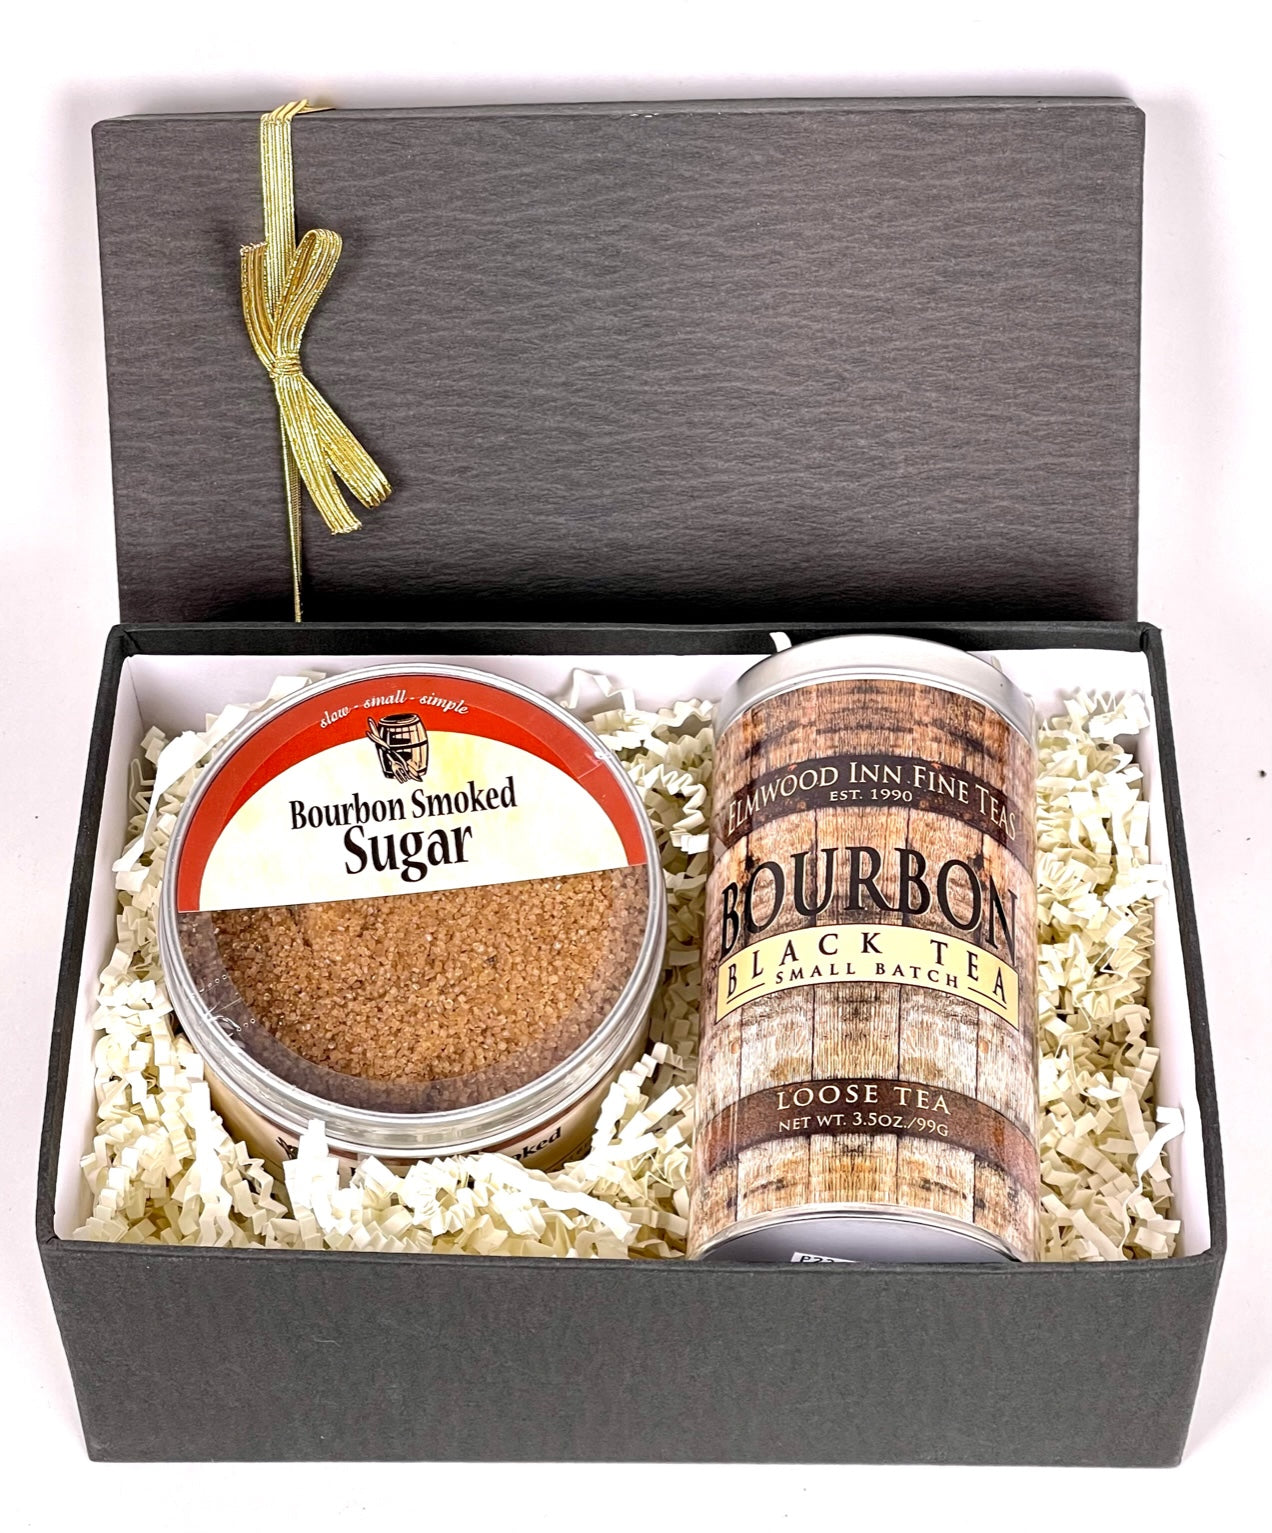 Bourbon Tea Gift Box - Loose Tea